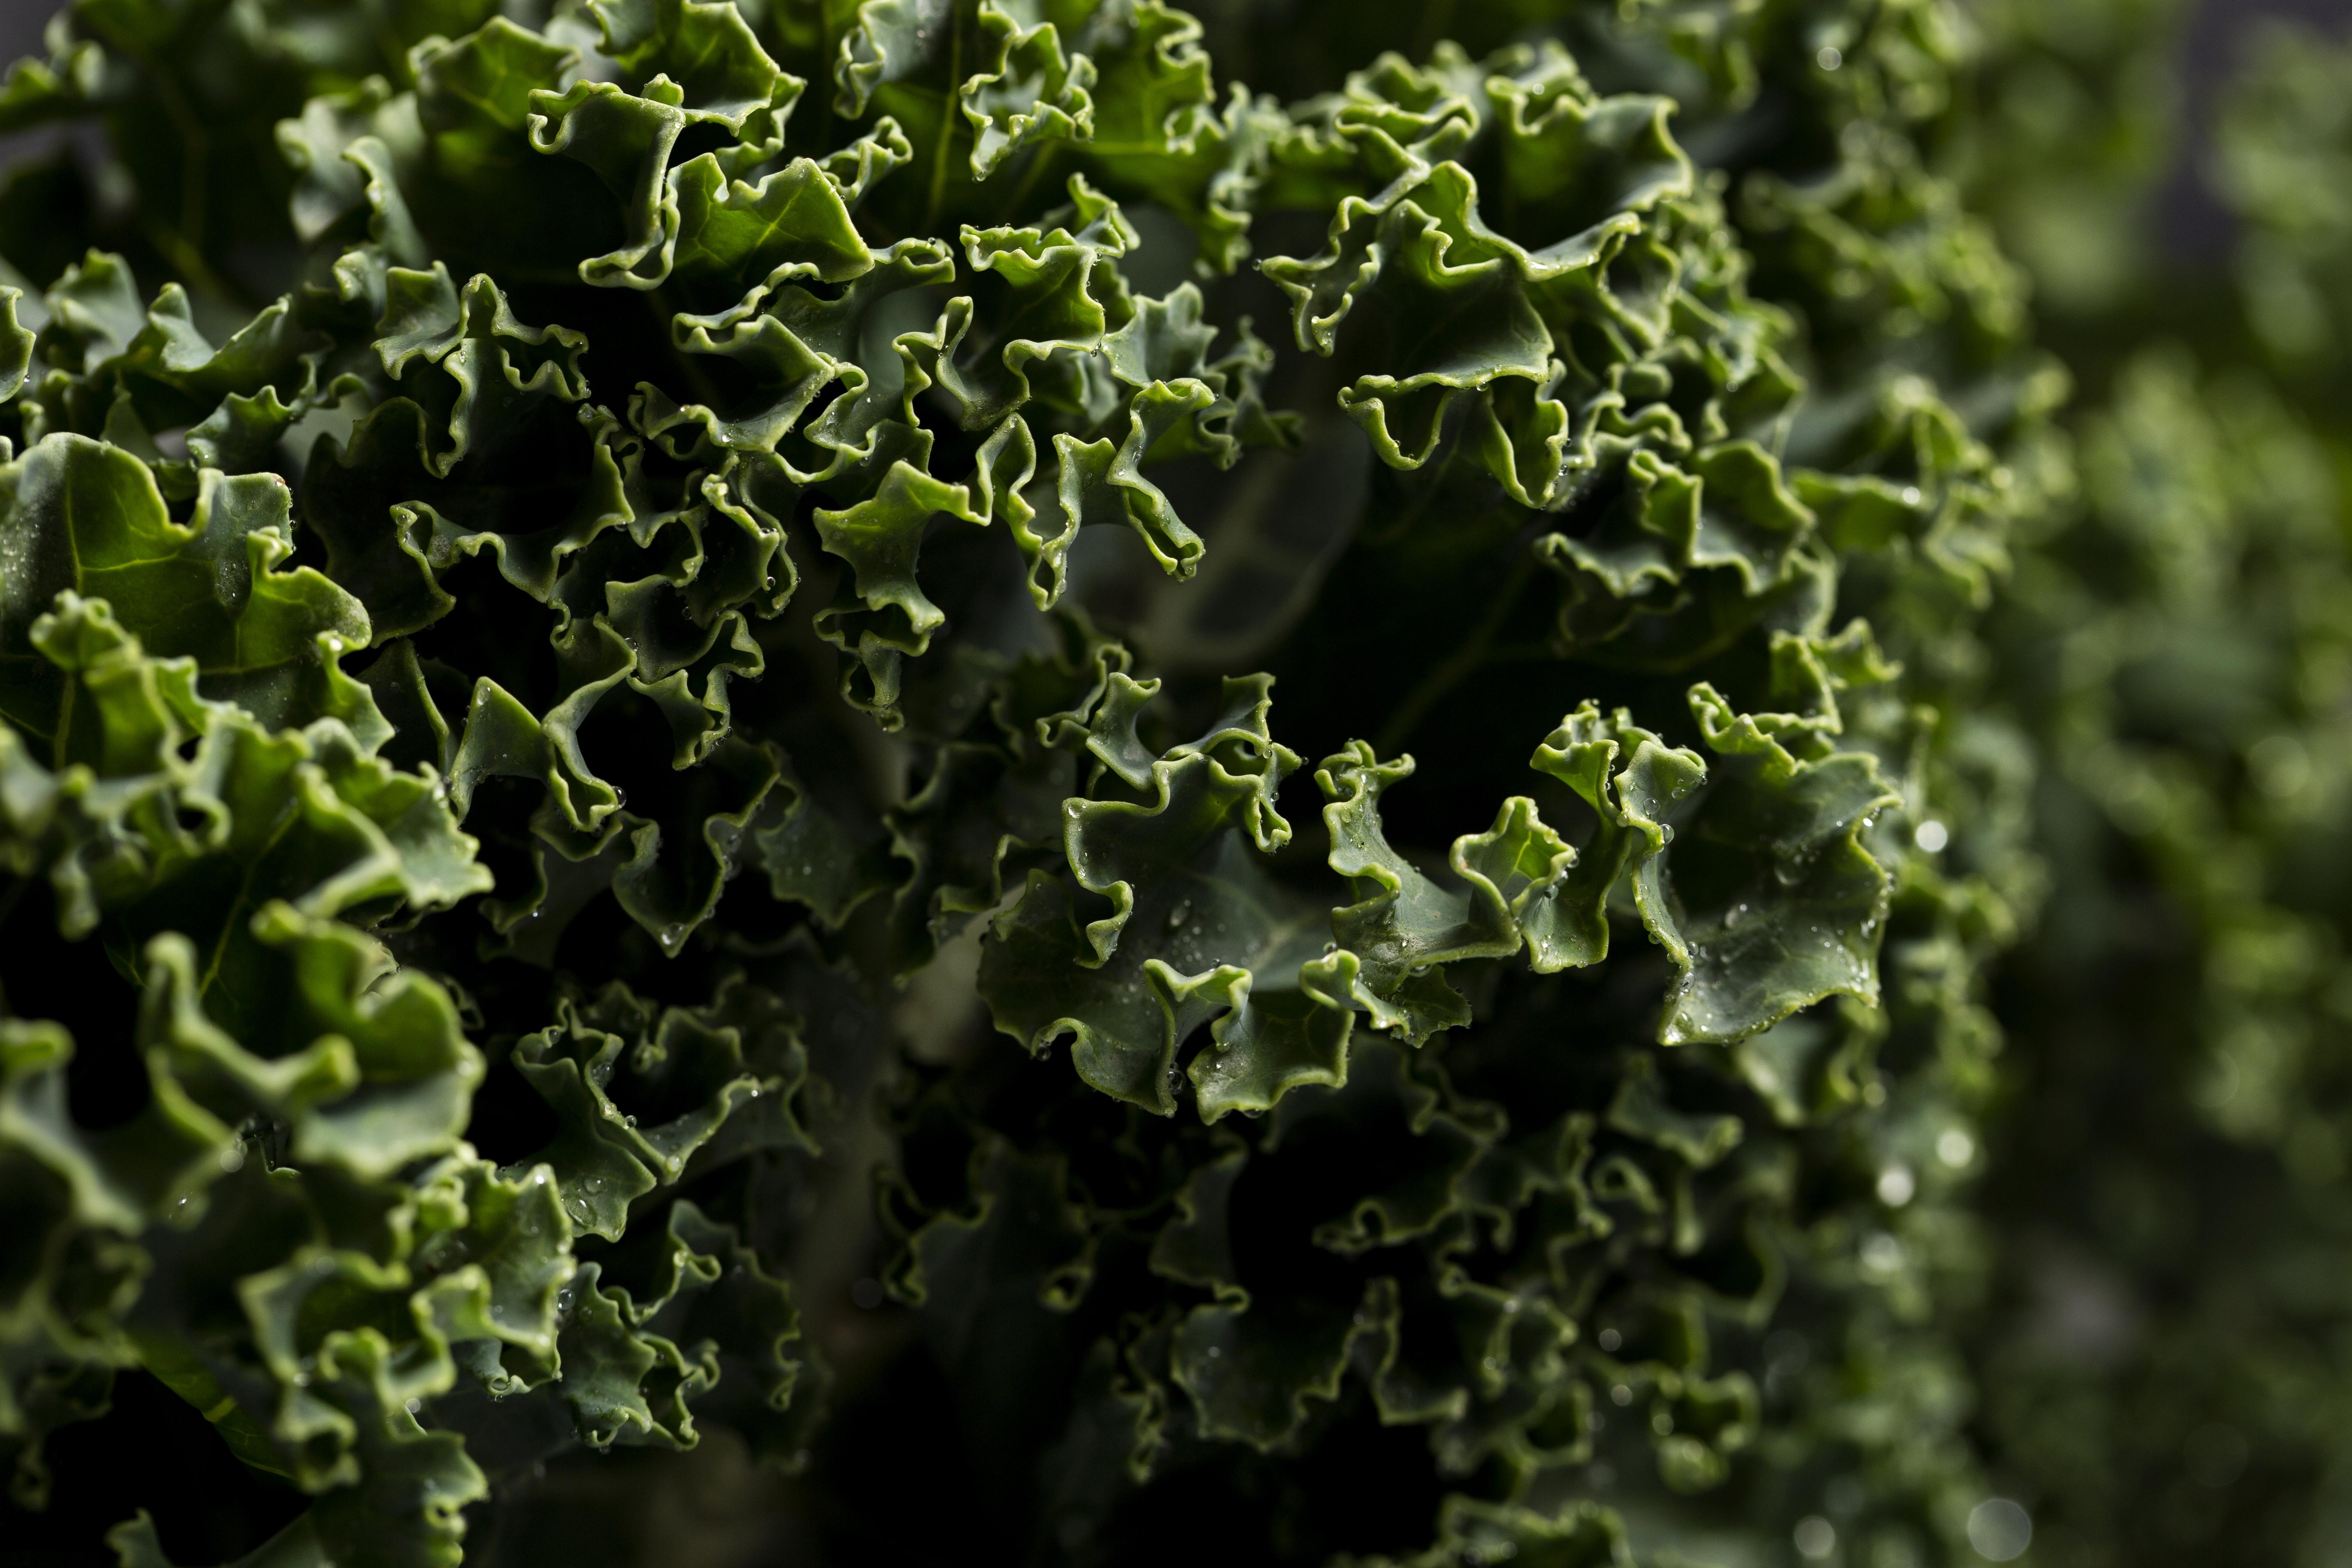 Benefits of eating kale - Dr. Pingel